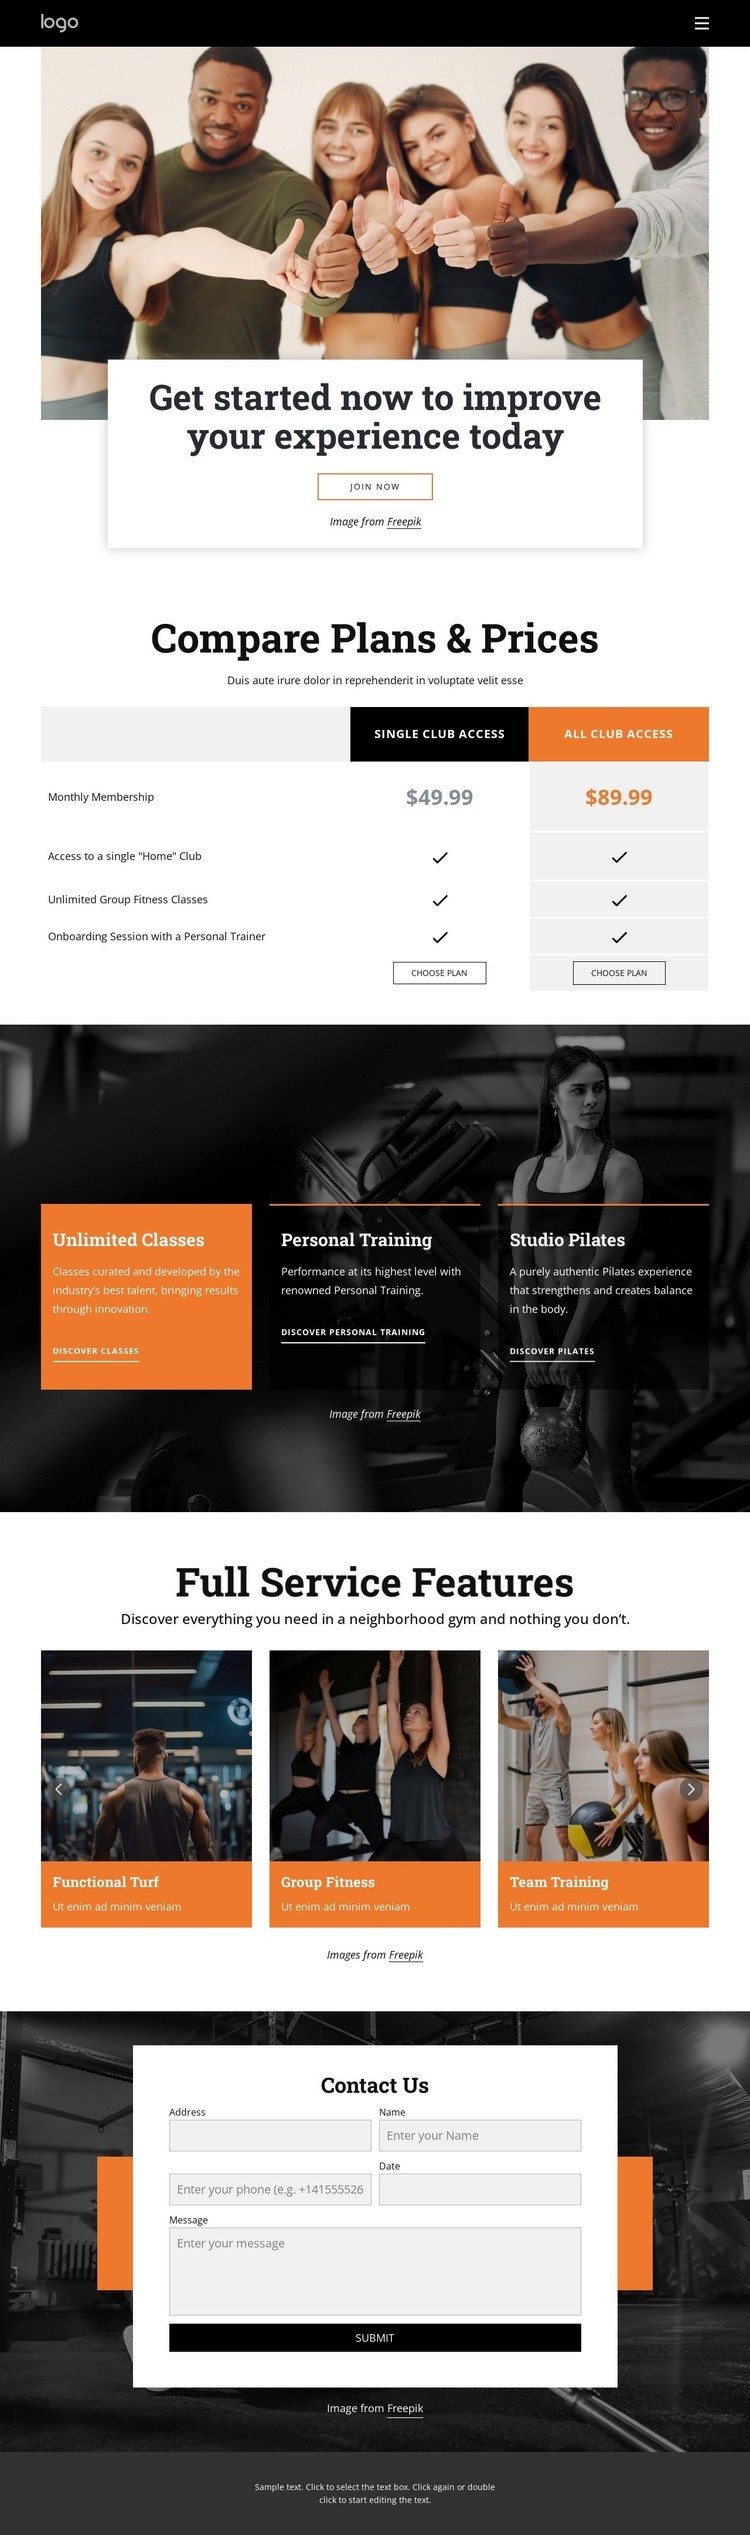 Exercise programs Homepage Design